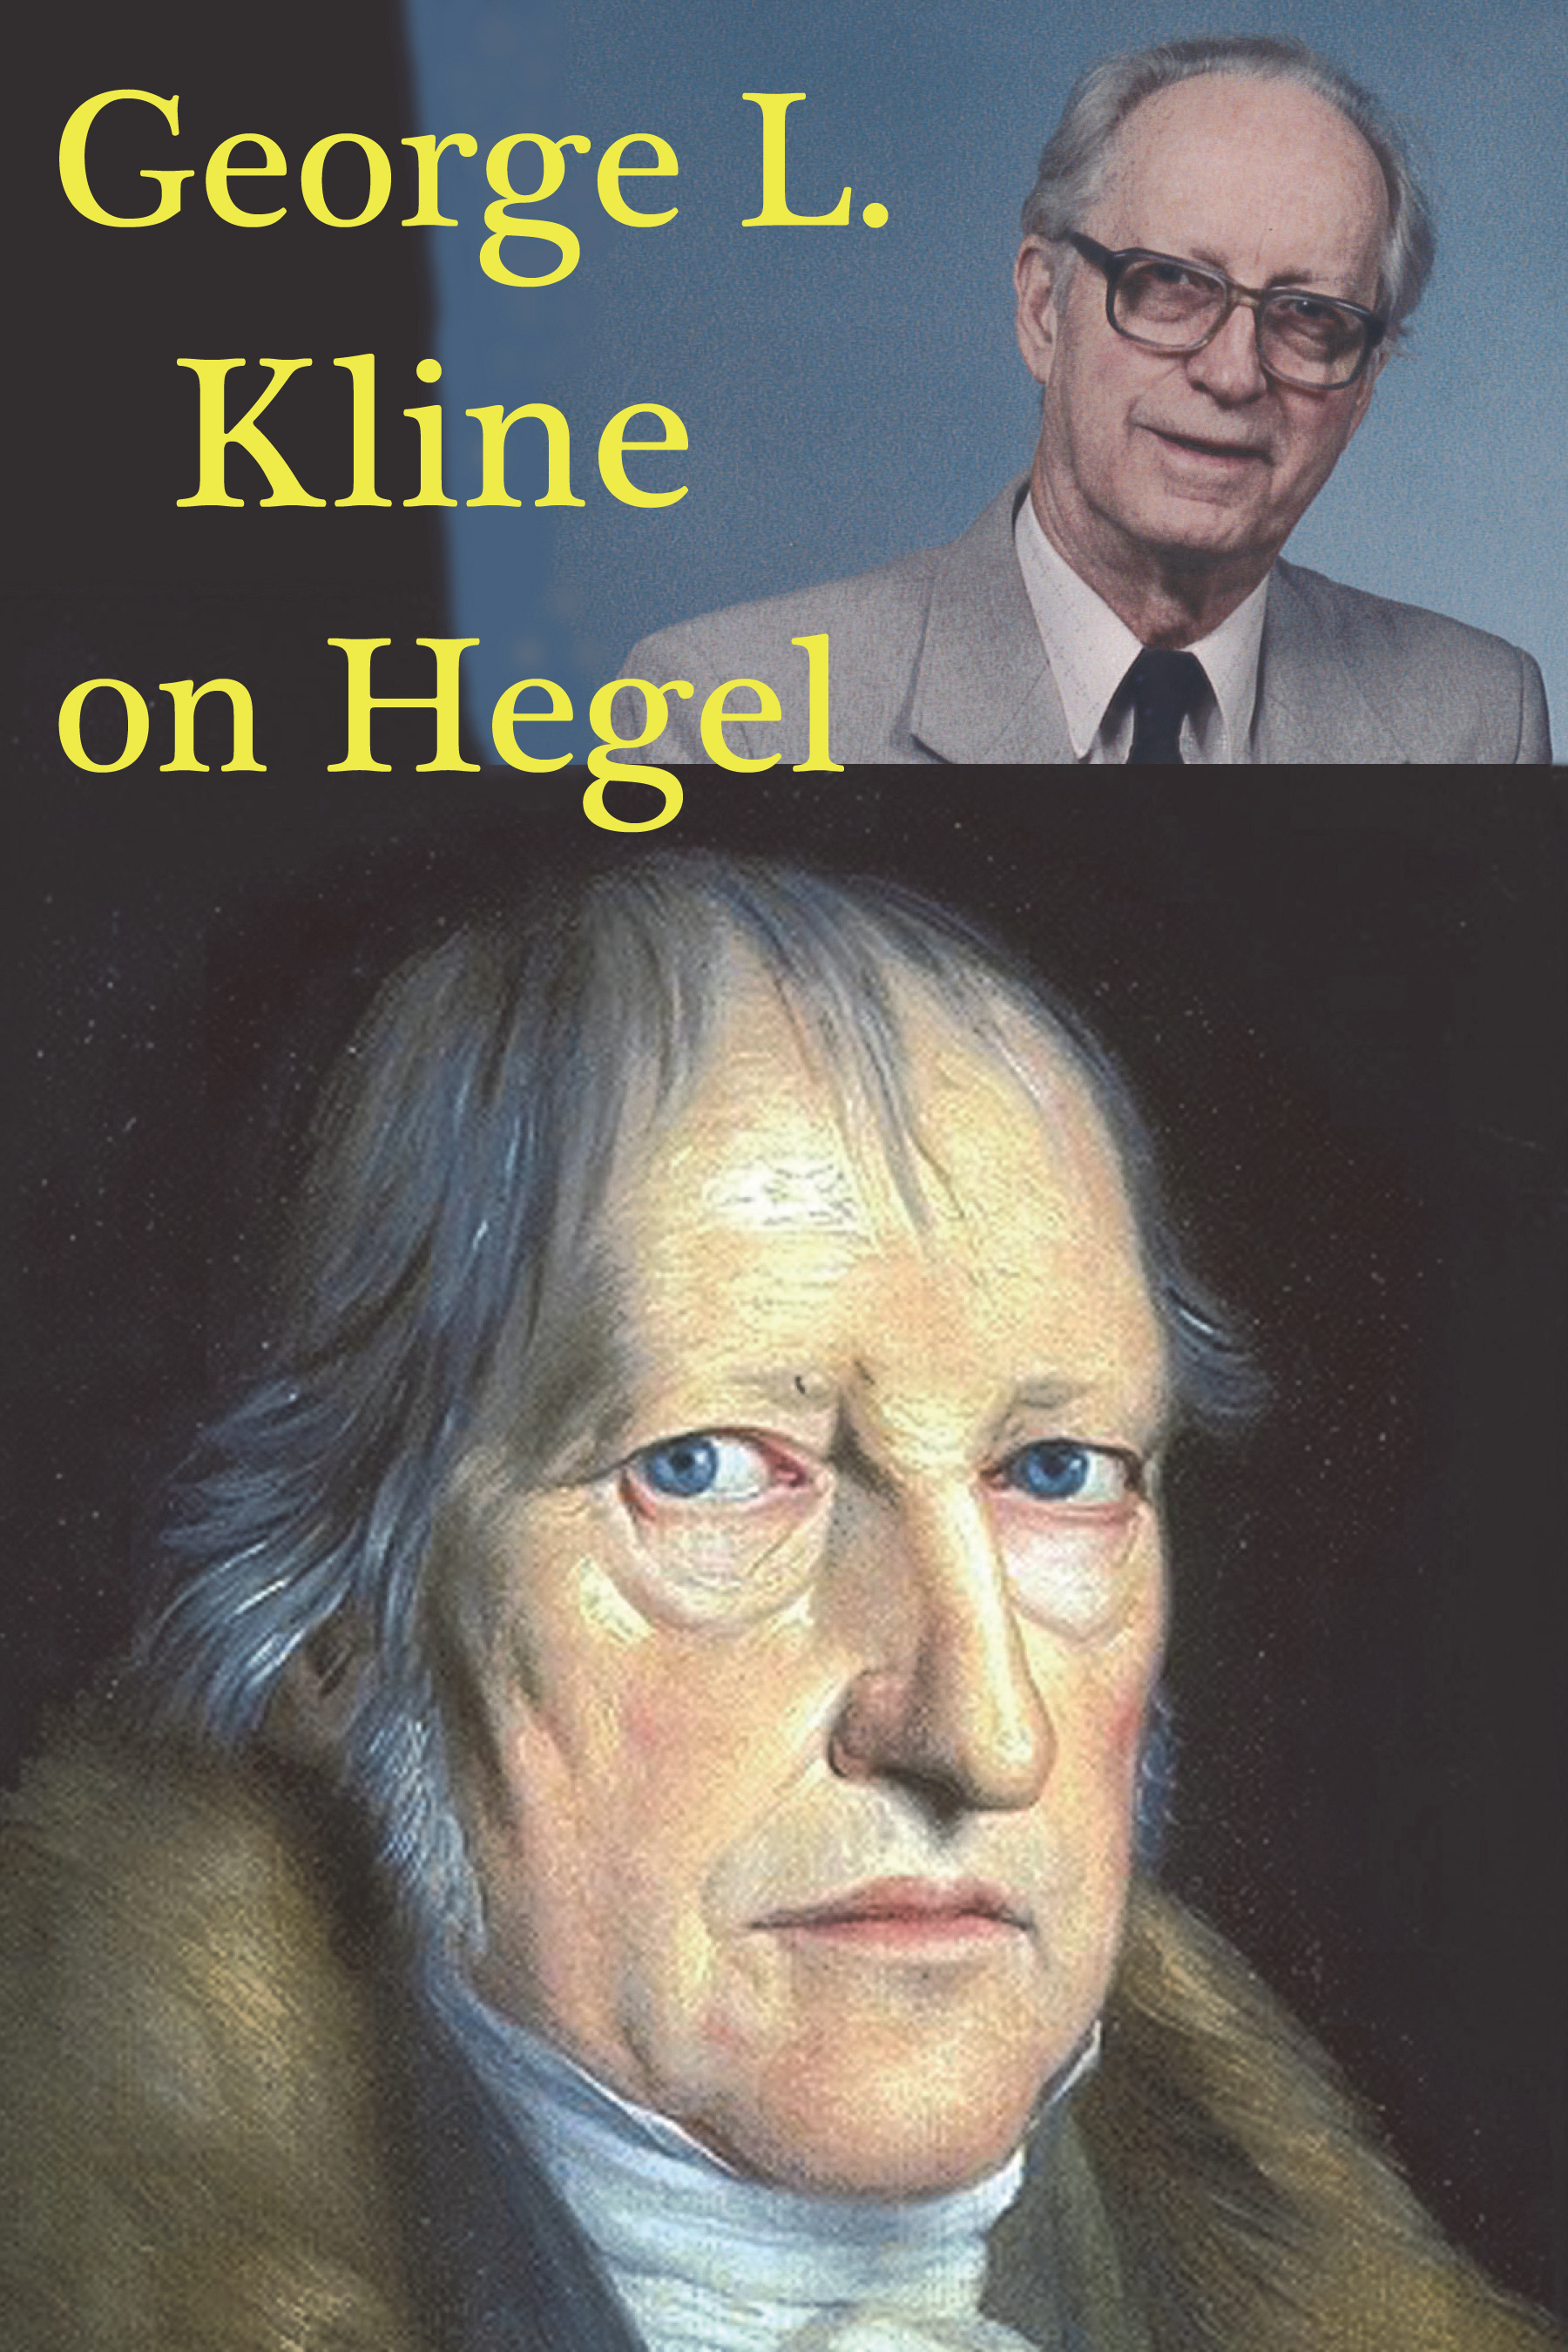 George L. Kline on Hegel